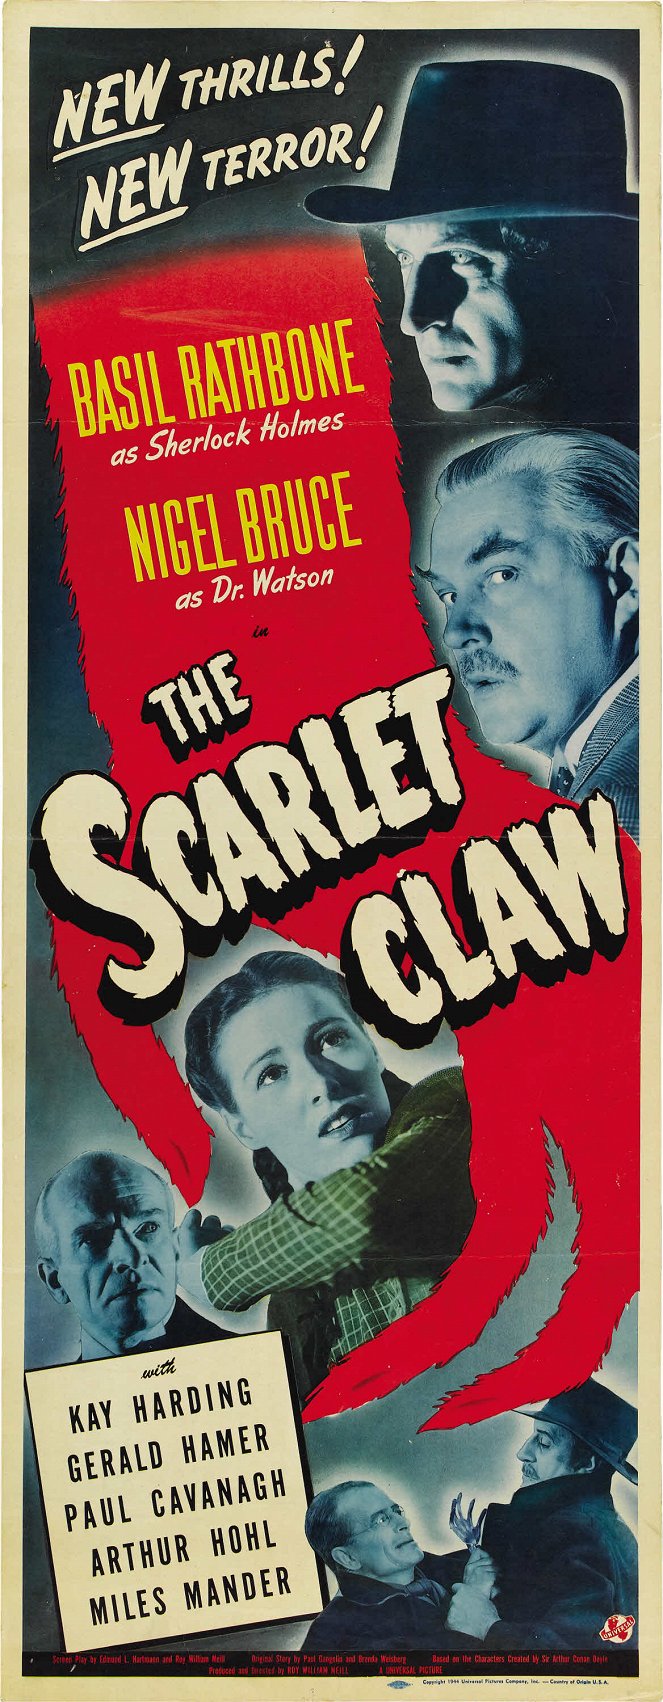 The Scarlet Claw - Julisteet